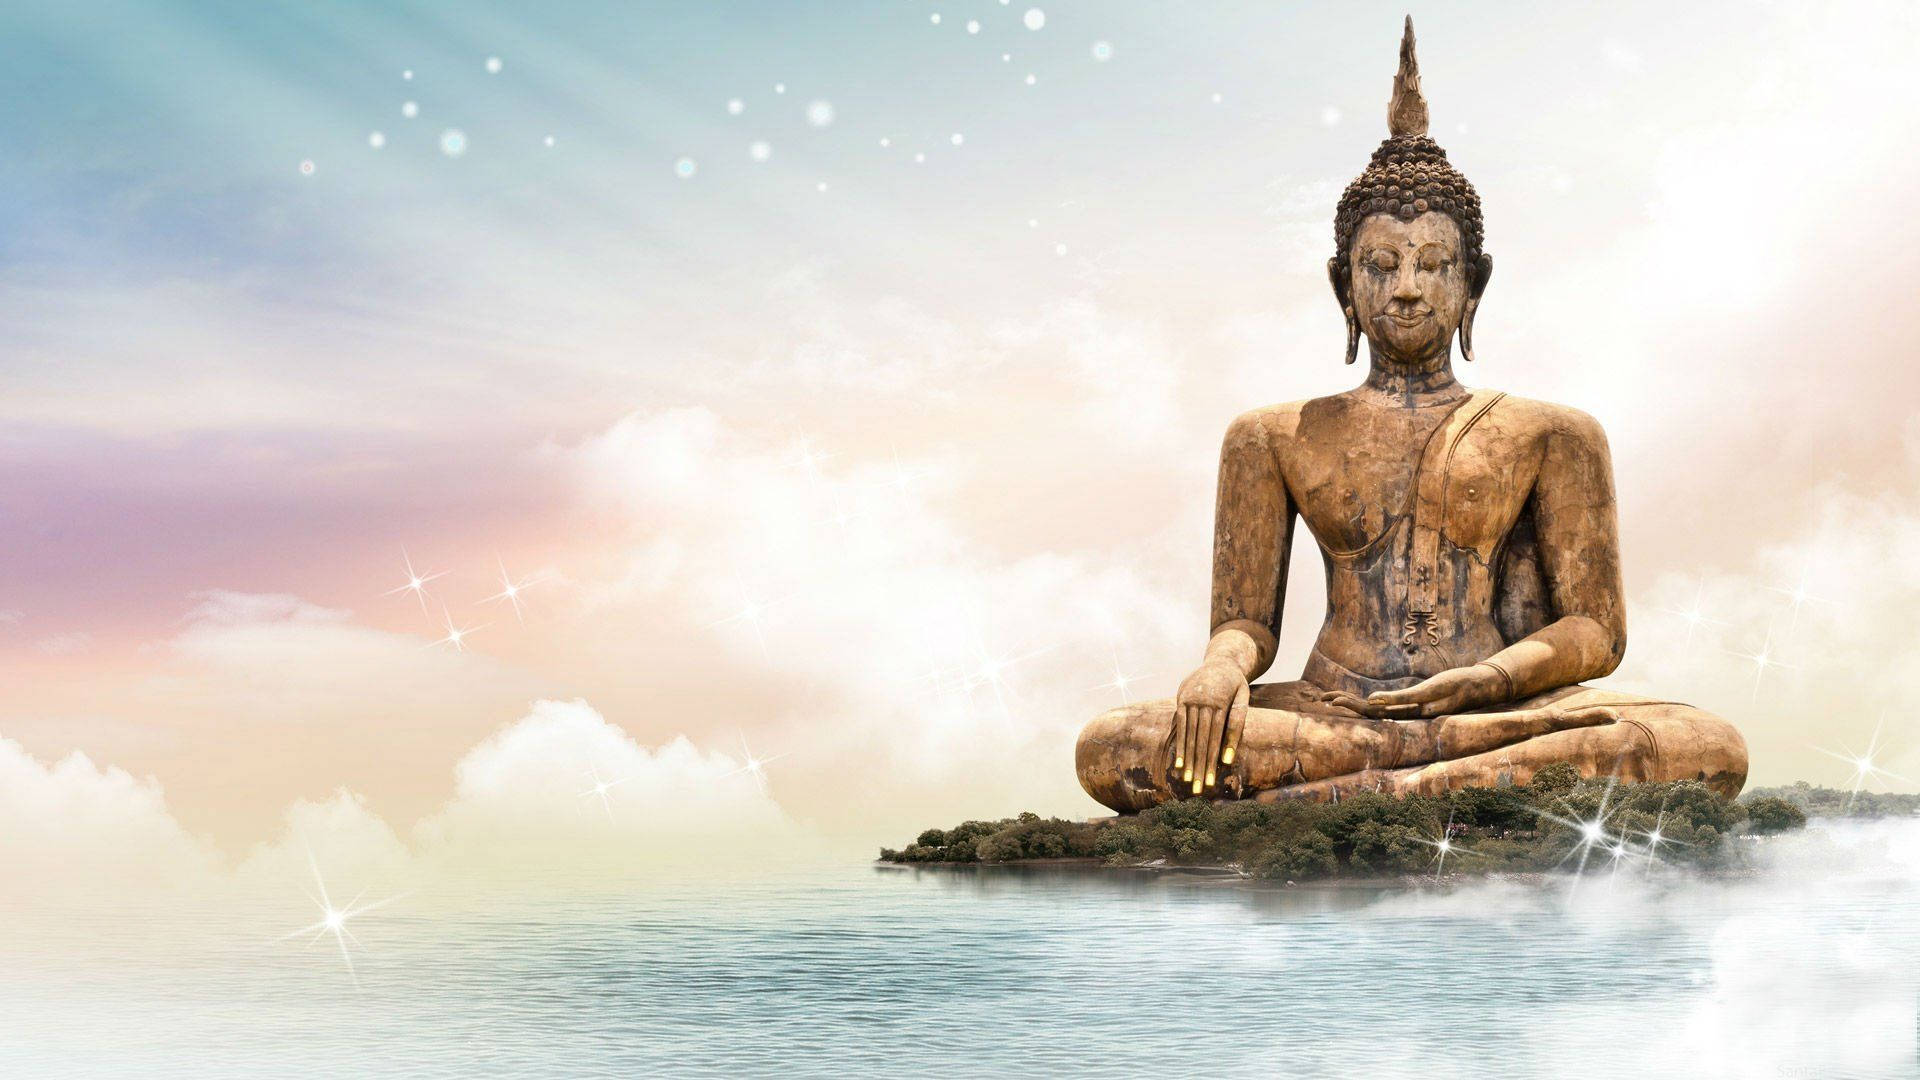 Buddha 3d Statue On Island Background